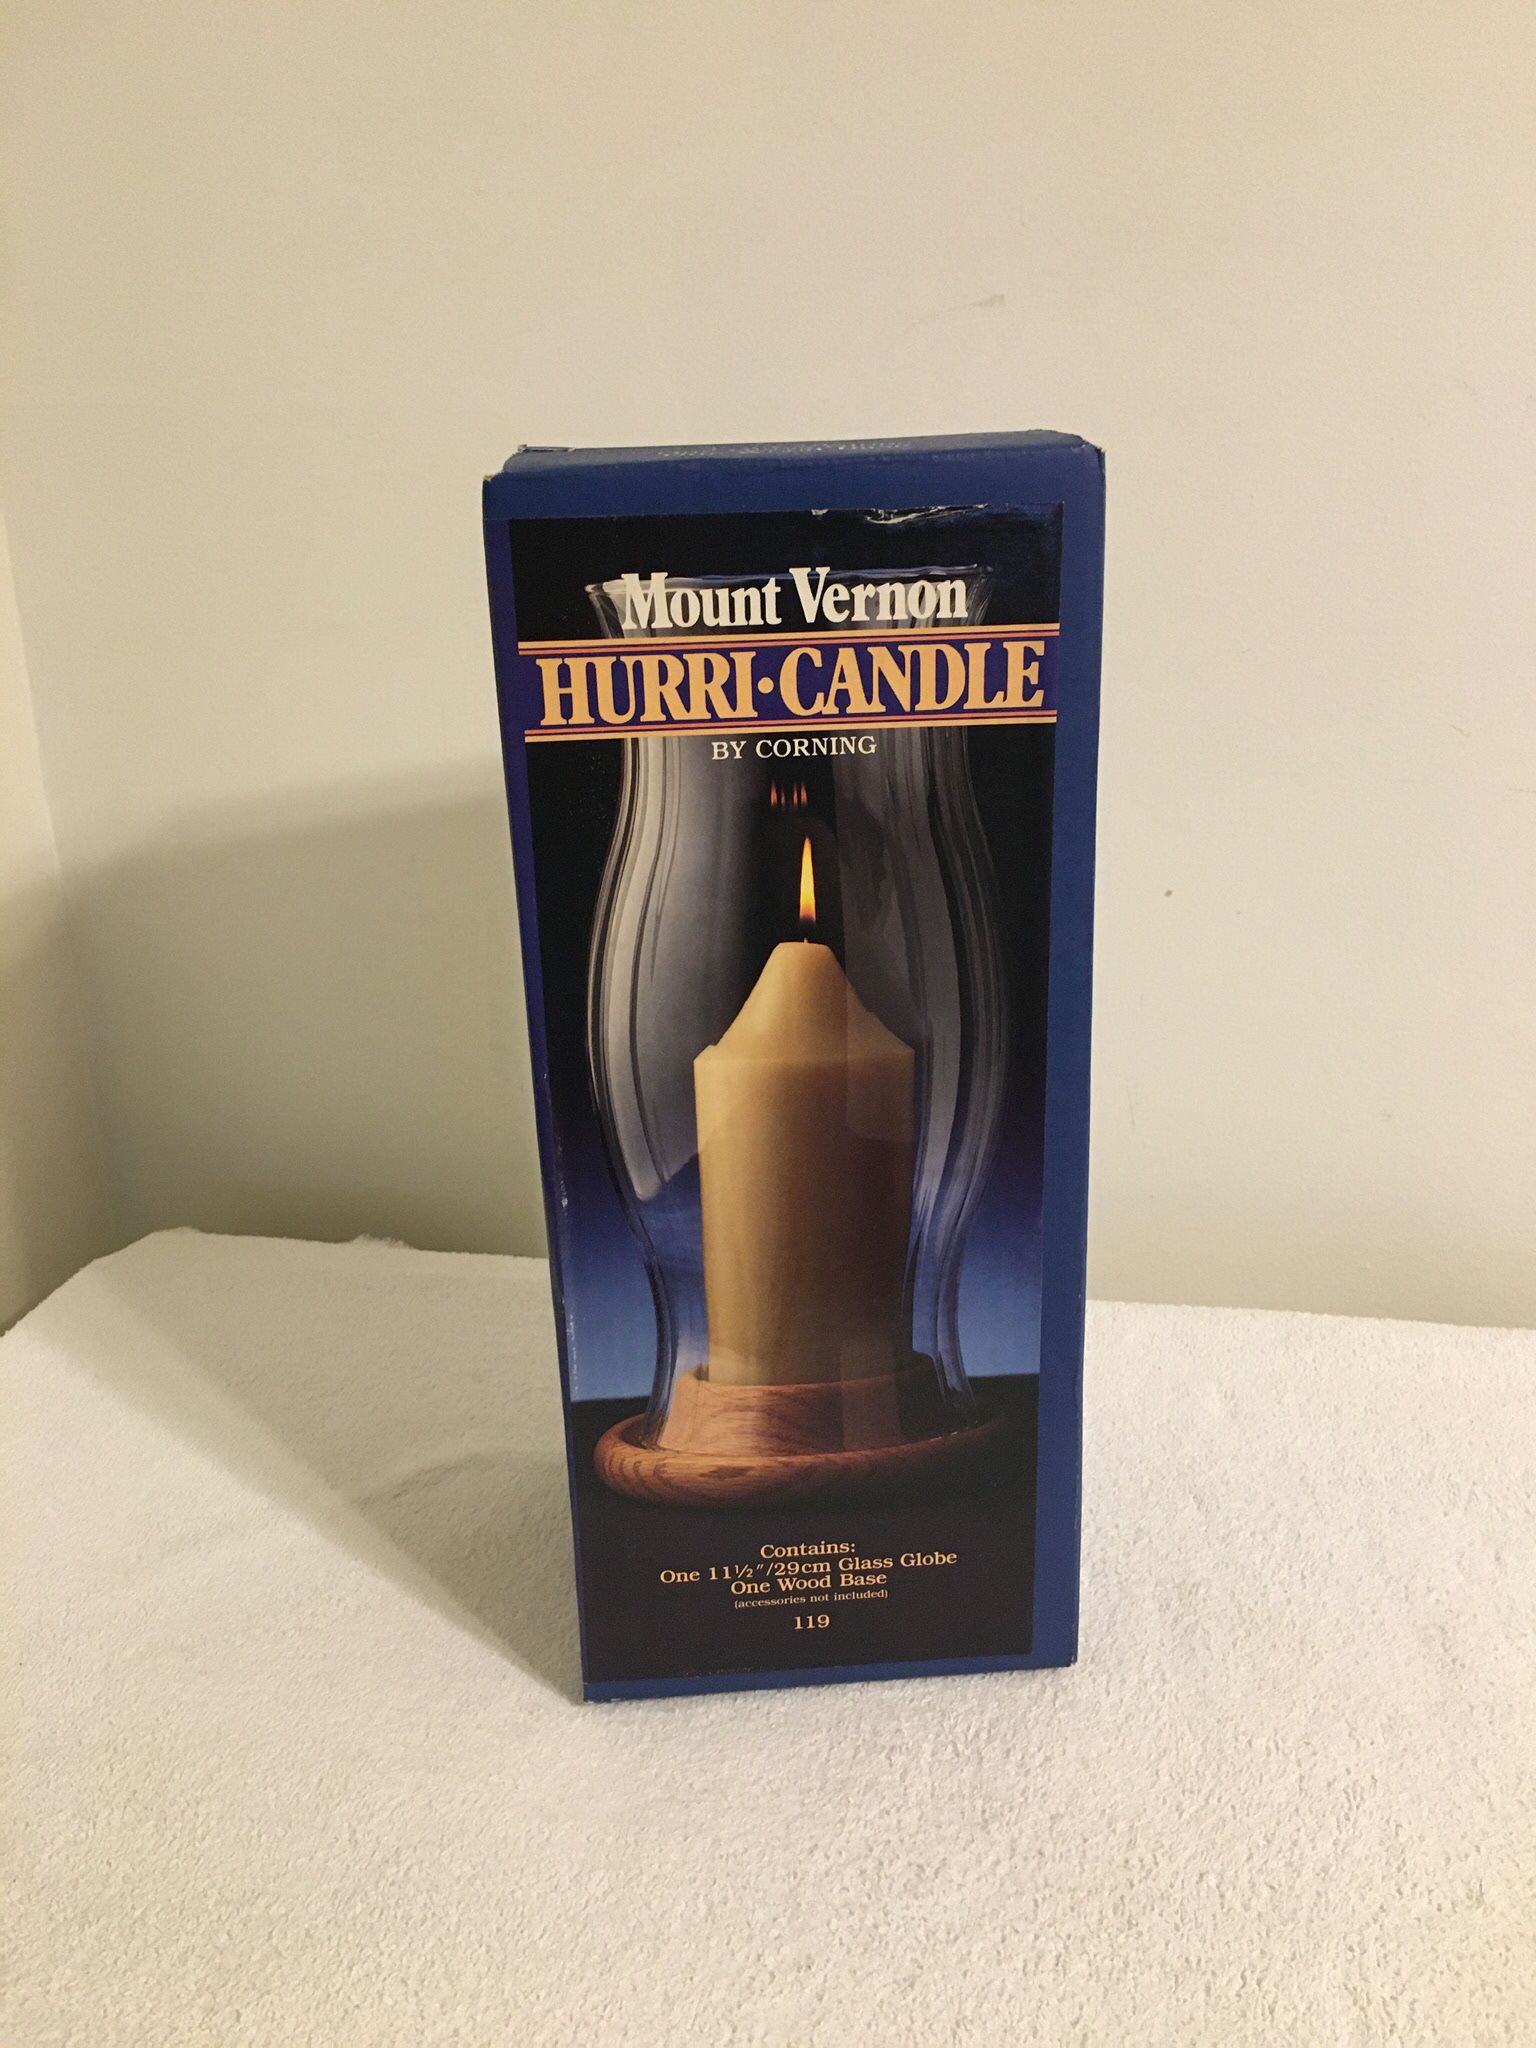 Corning Mount Vernon Hurricane Candle Holder Hurri-Candle #119 